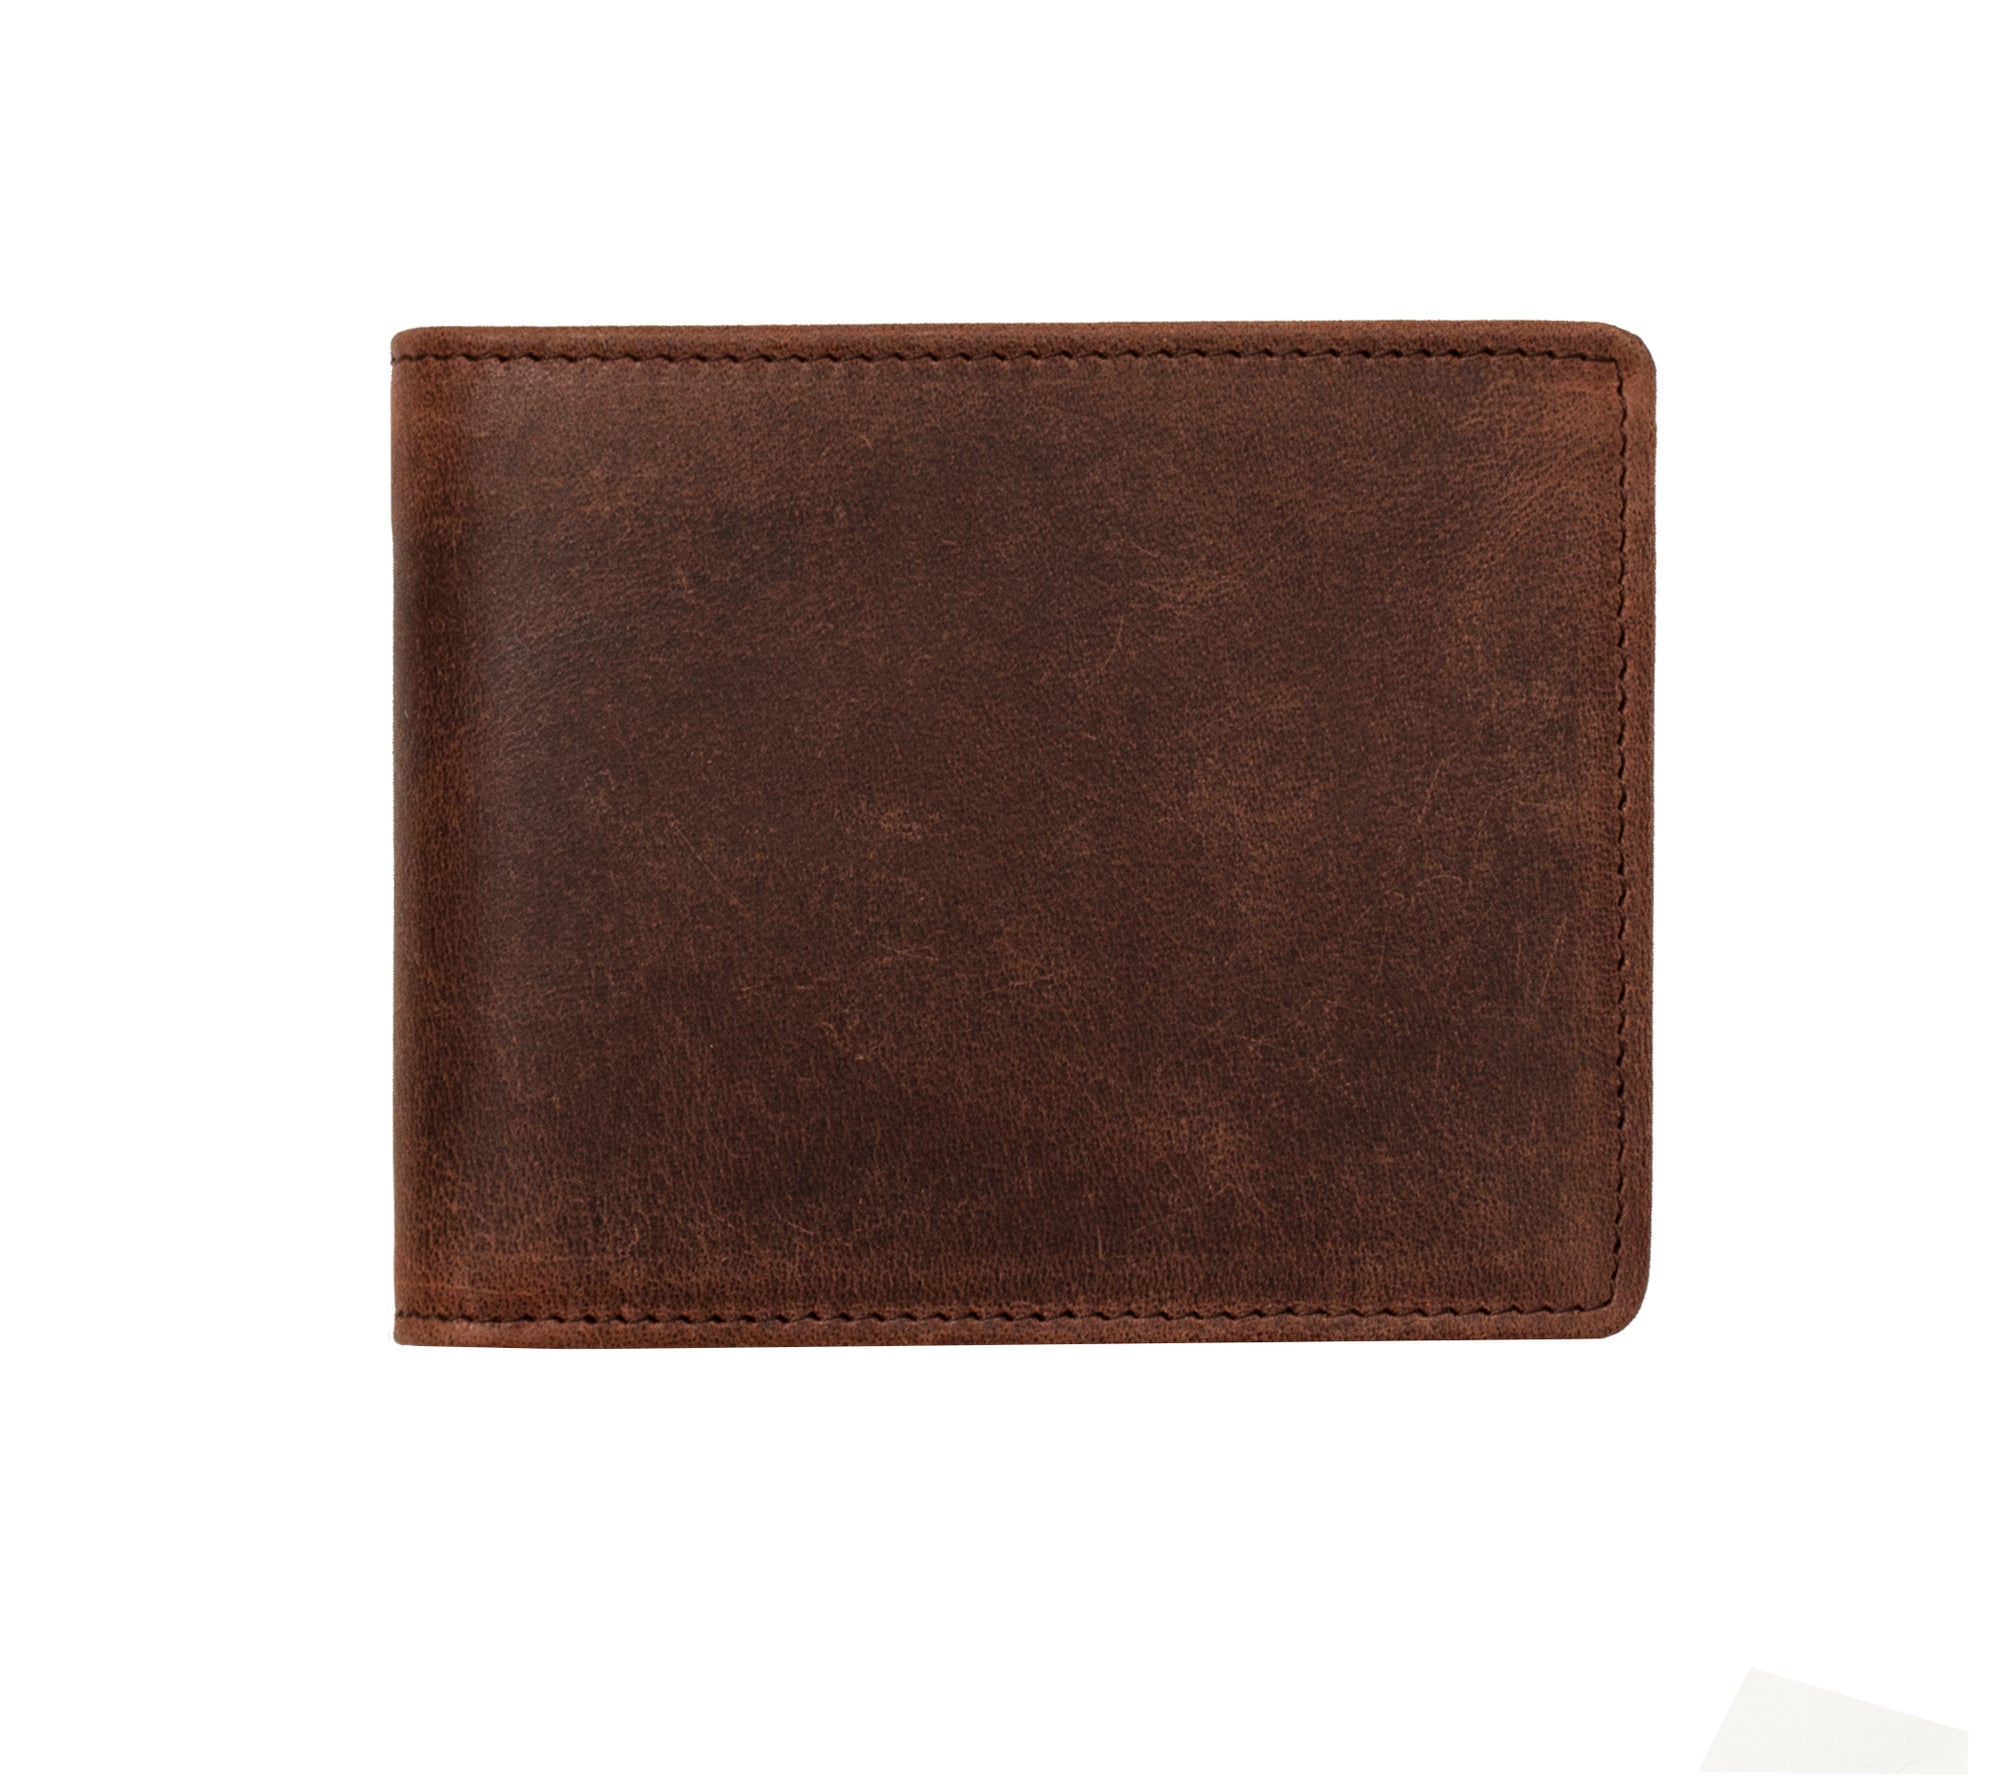 PRIMEHIDE Leather Buff Hunter Card & Note Wallet - 7007